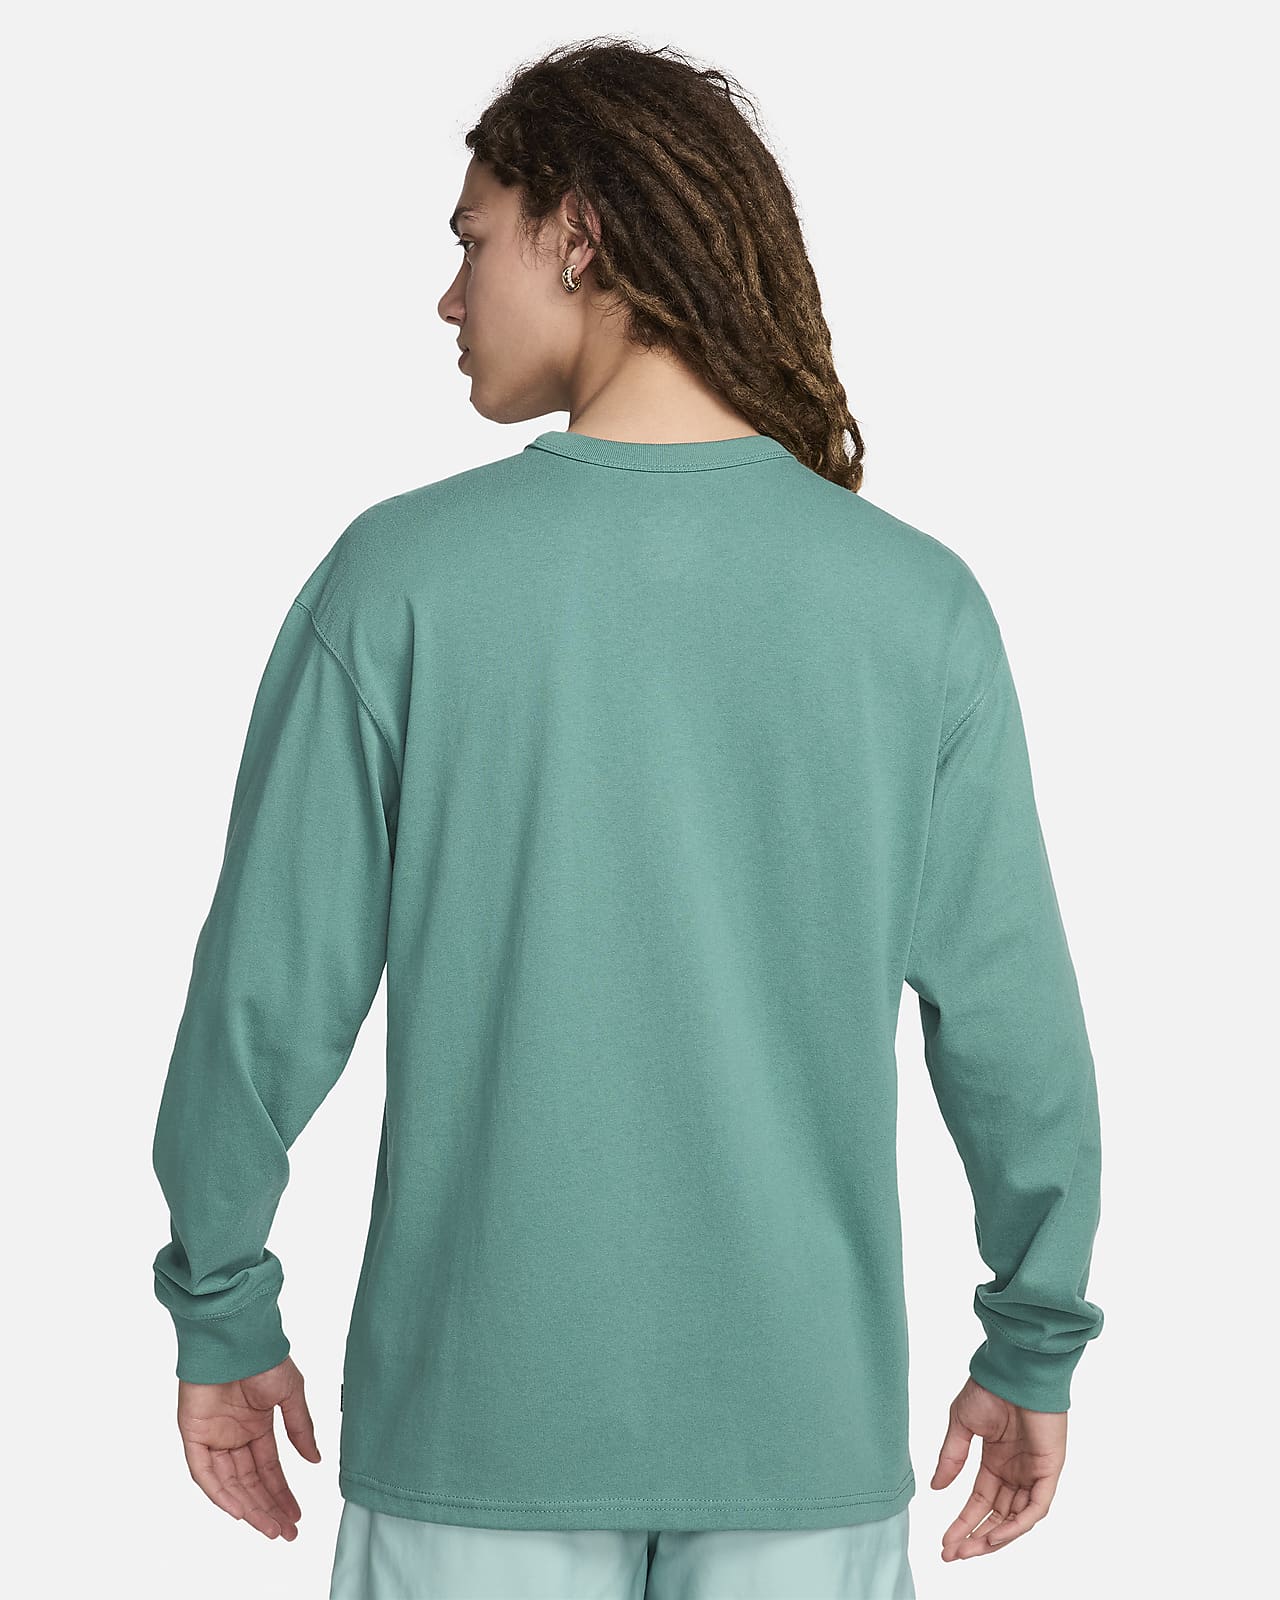 Jordan Premium Men Solid Imported Lycra Matty Sports Full Sleeve Gym Wear  Tshirt at Rs 435/piece, Men Lycra T-Shirt in Ludhiana